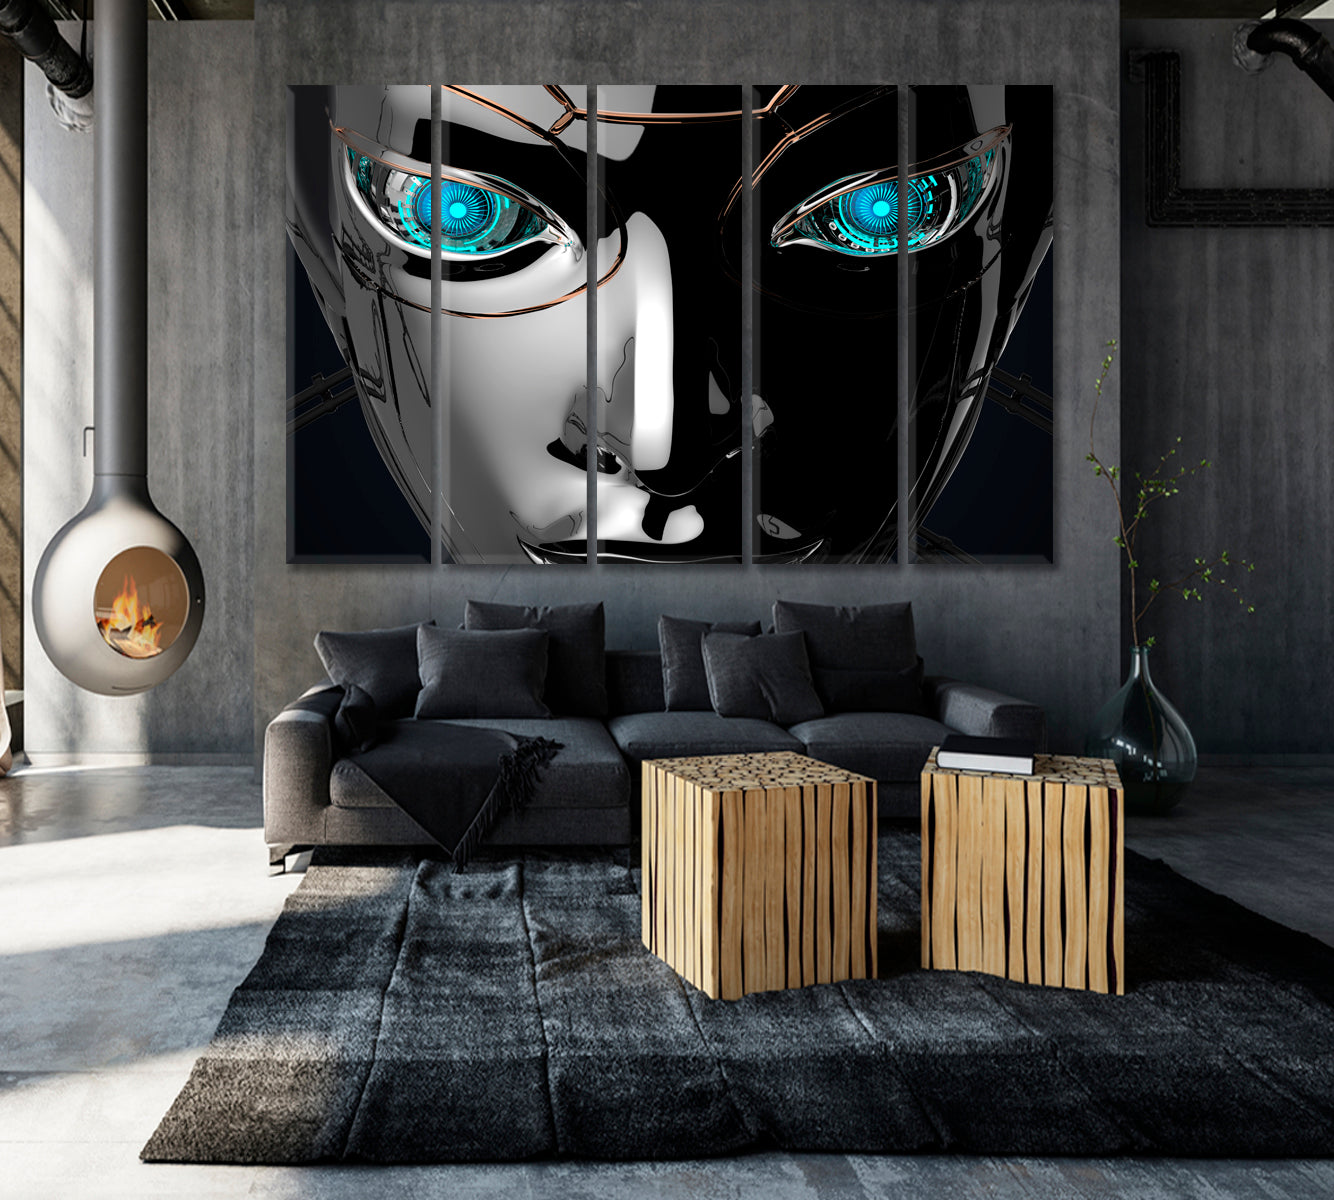 CYBER WORLD Female Bot Face Robot Futuristic Cyber Technology Poster Business Concept Wall Art Artesty 5 panels 36" x 24" 